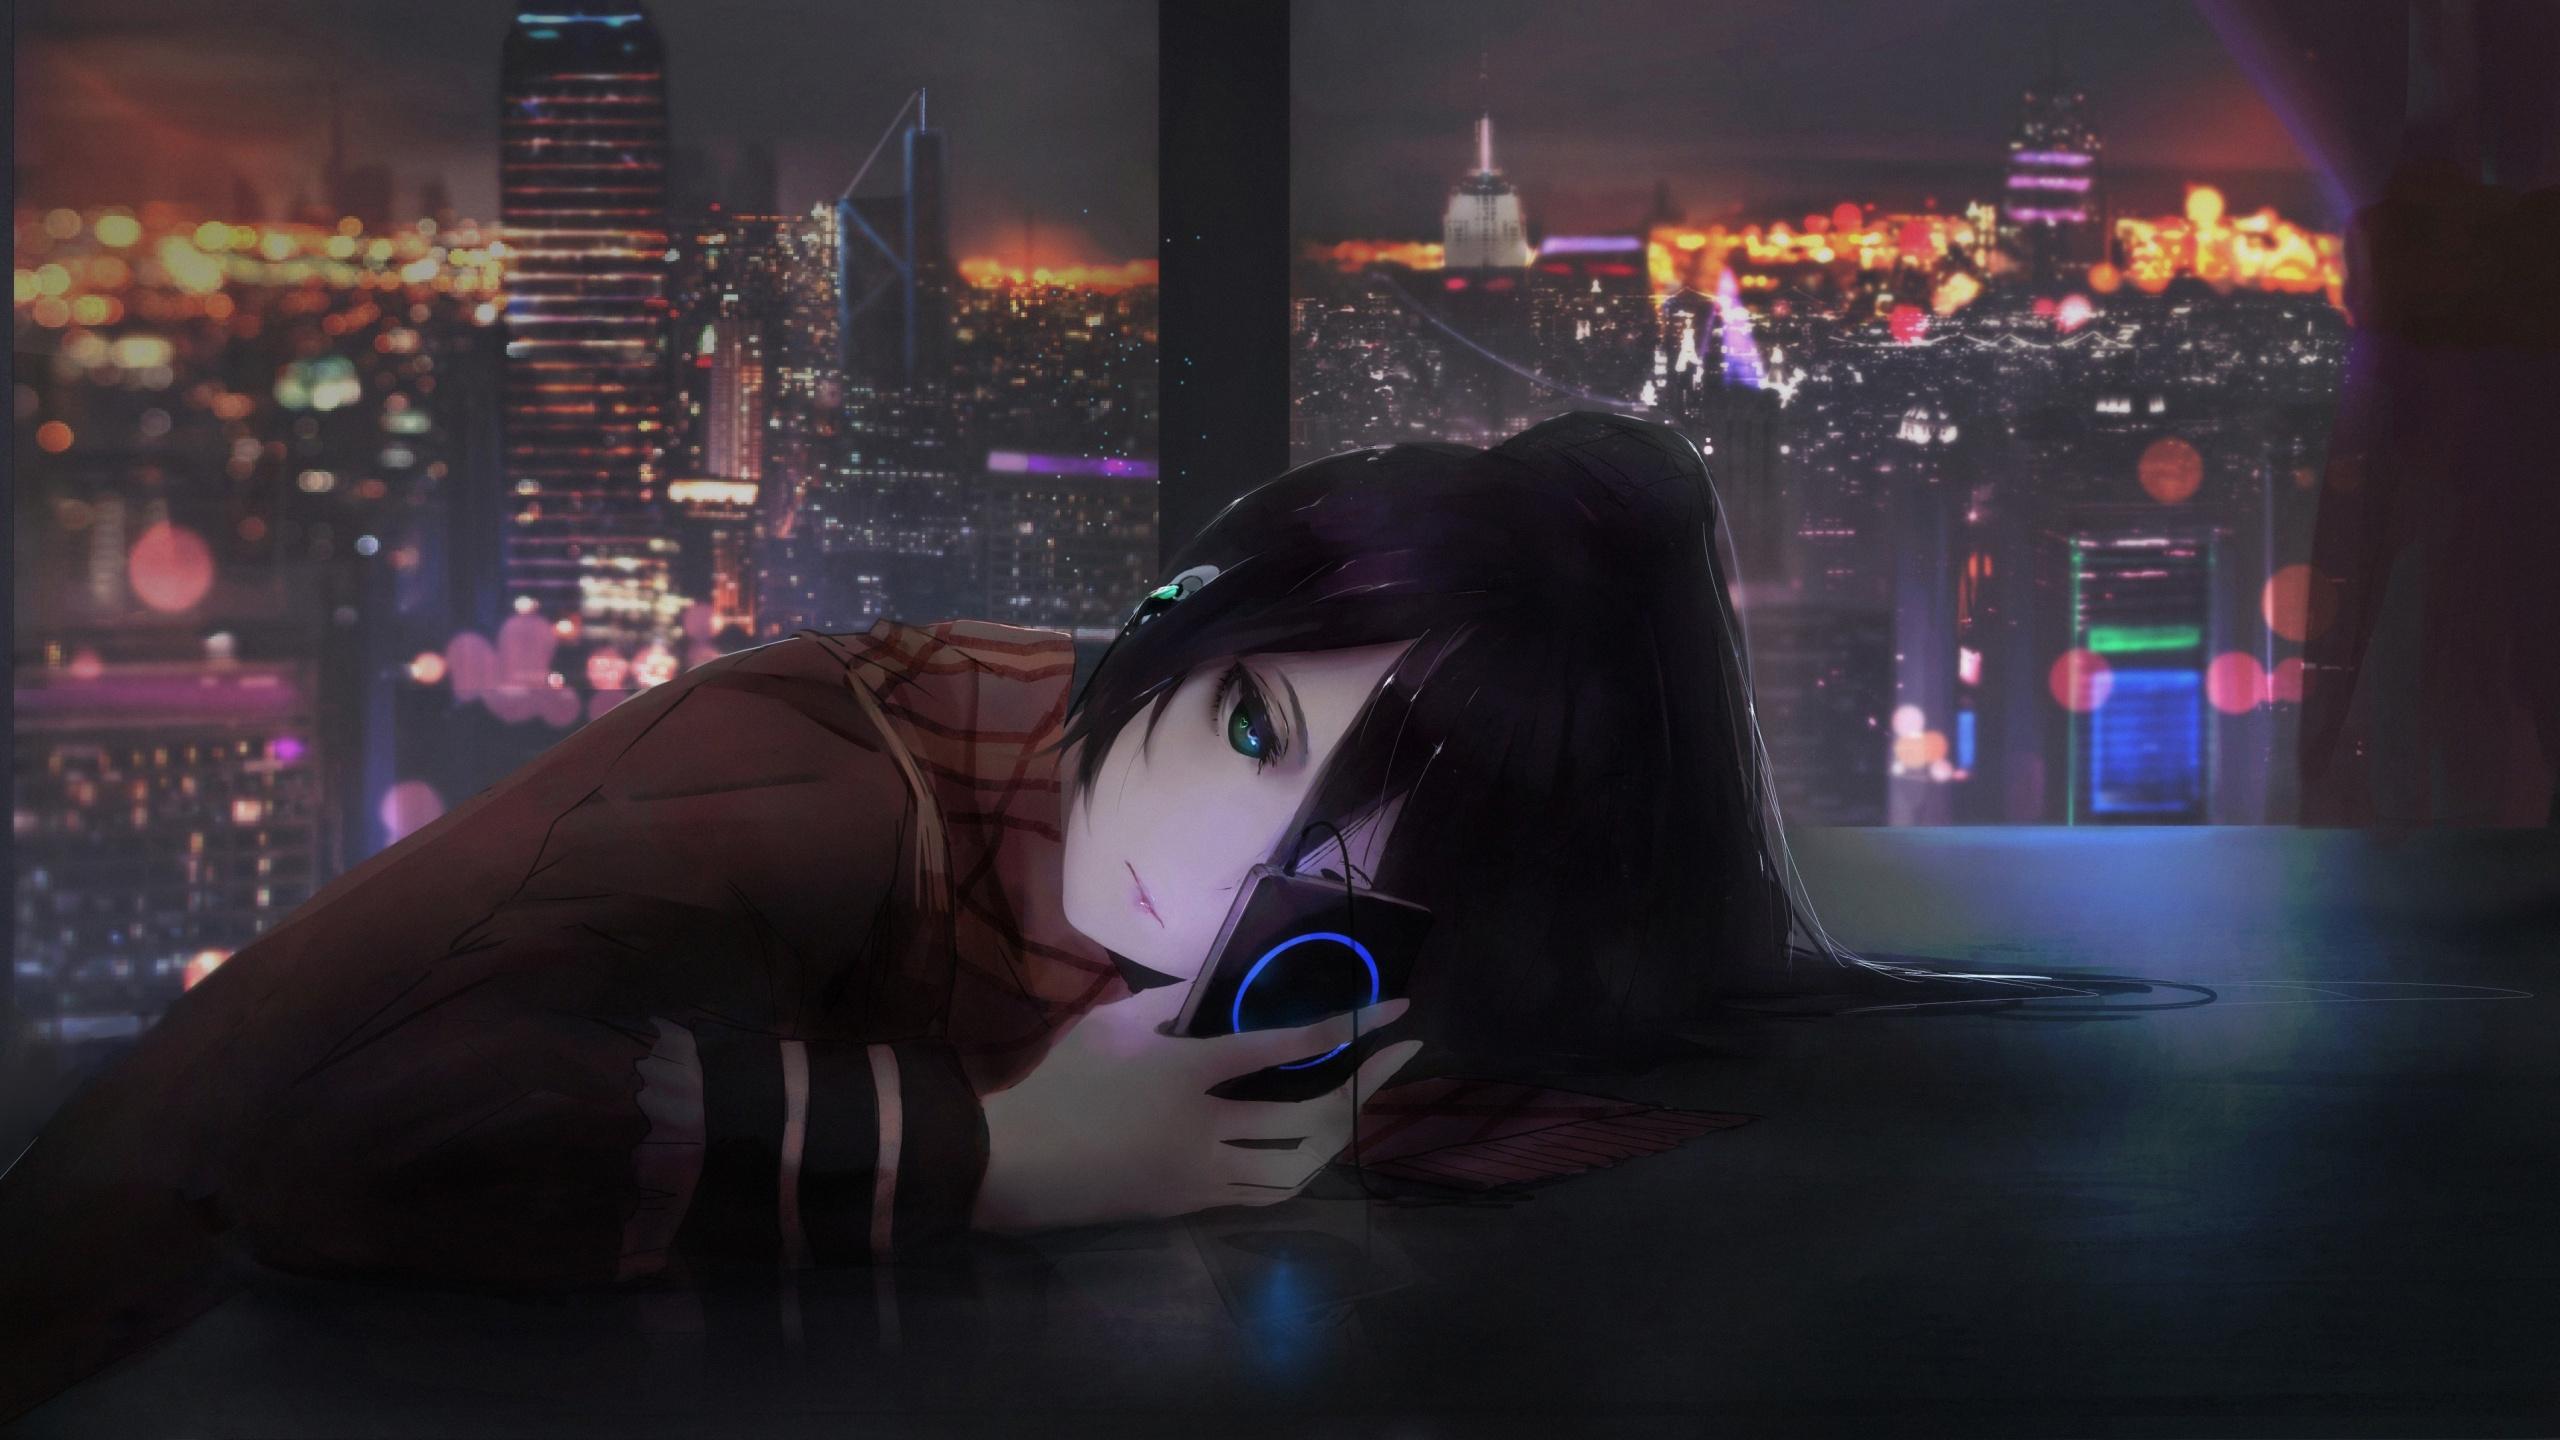 Download 2560x1440 wallpaper anime girl using phone